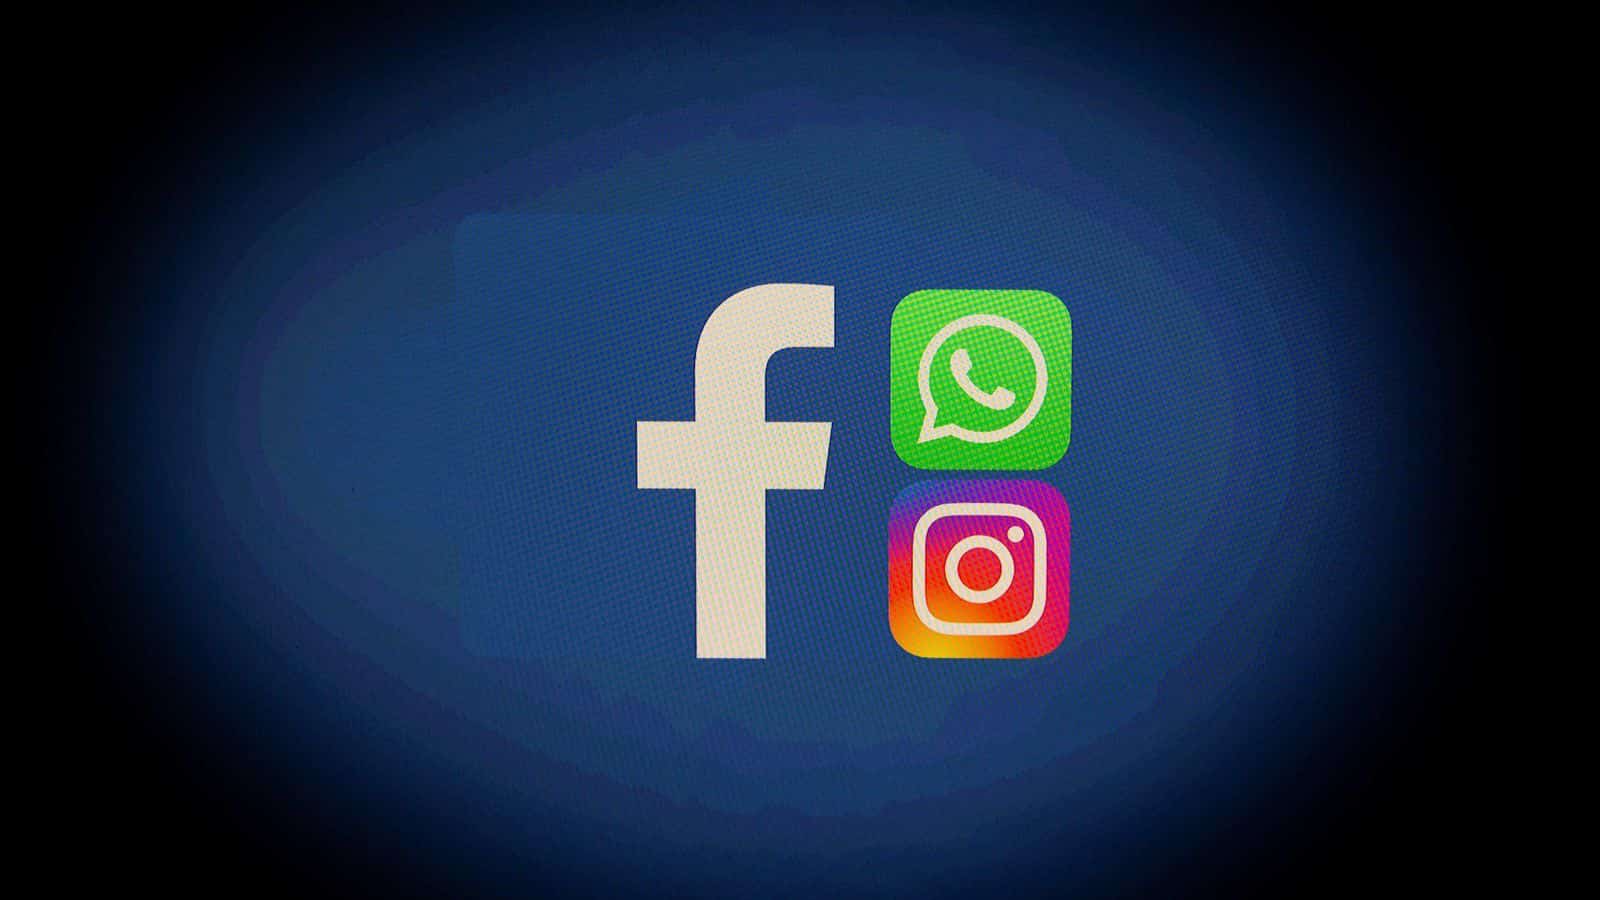 WhatsApp, Facebook, Instagram are back online: Mark Zuckerberg